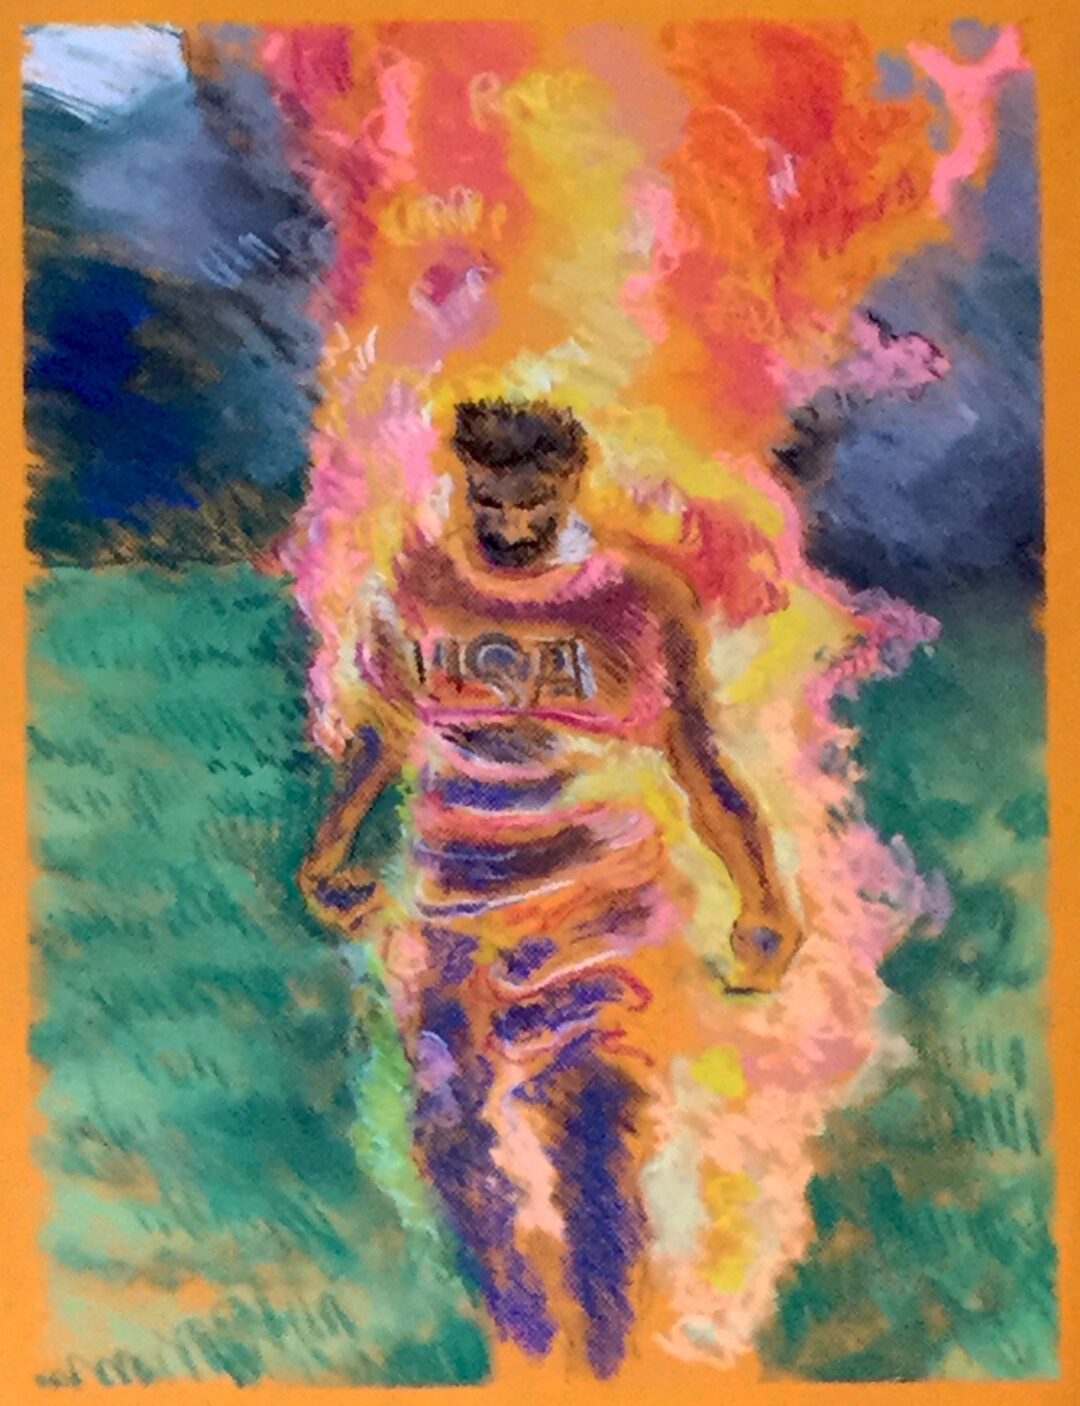 Brian McCormack  “Burning Man” pastel on pastel paper, framed size 23 ”W x 35 ”H, 2020, $300.00